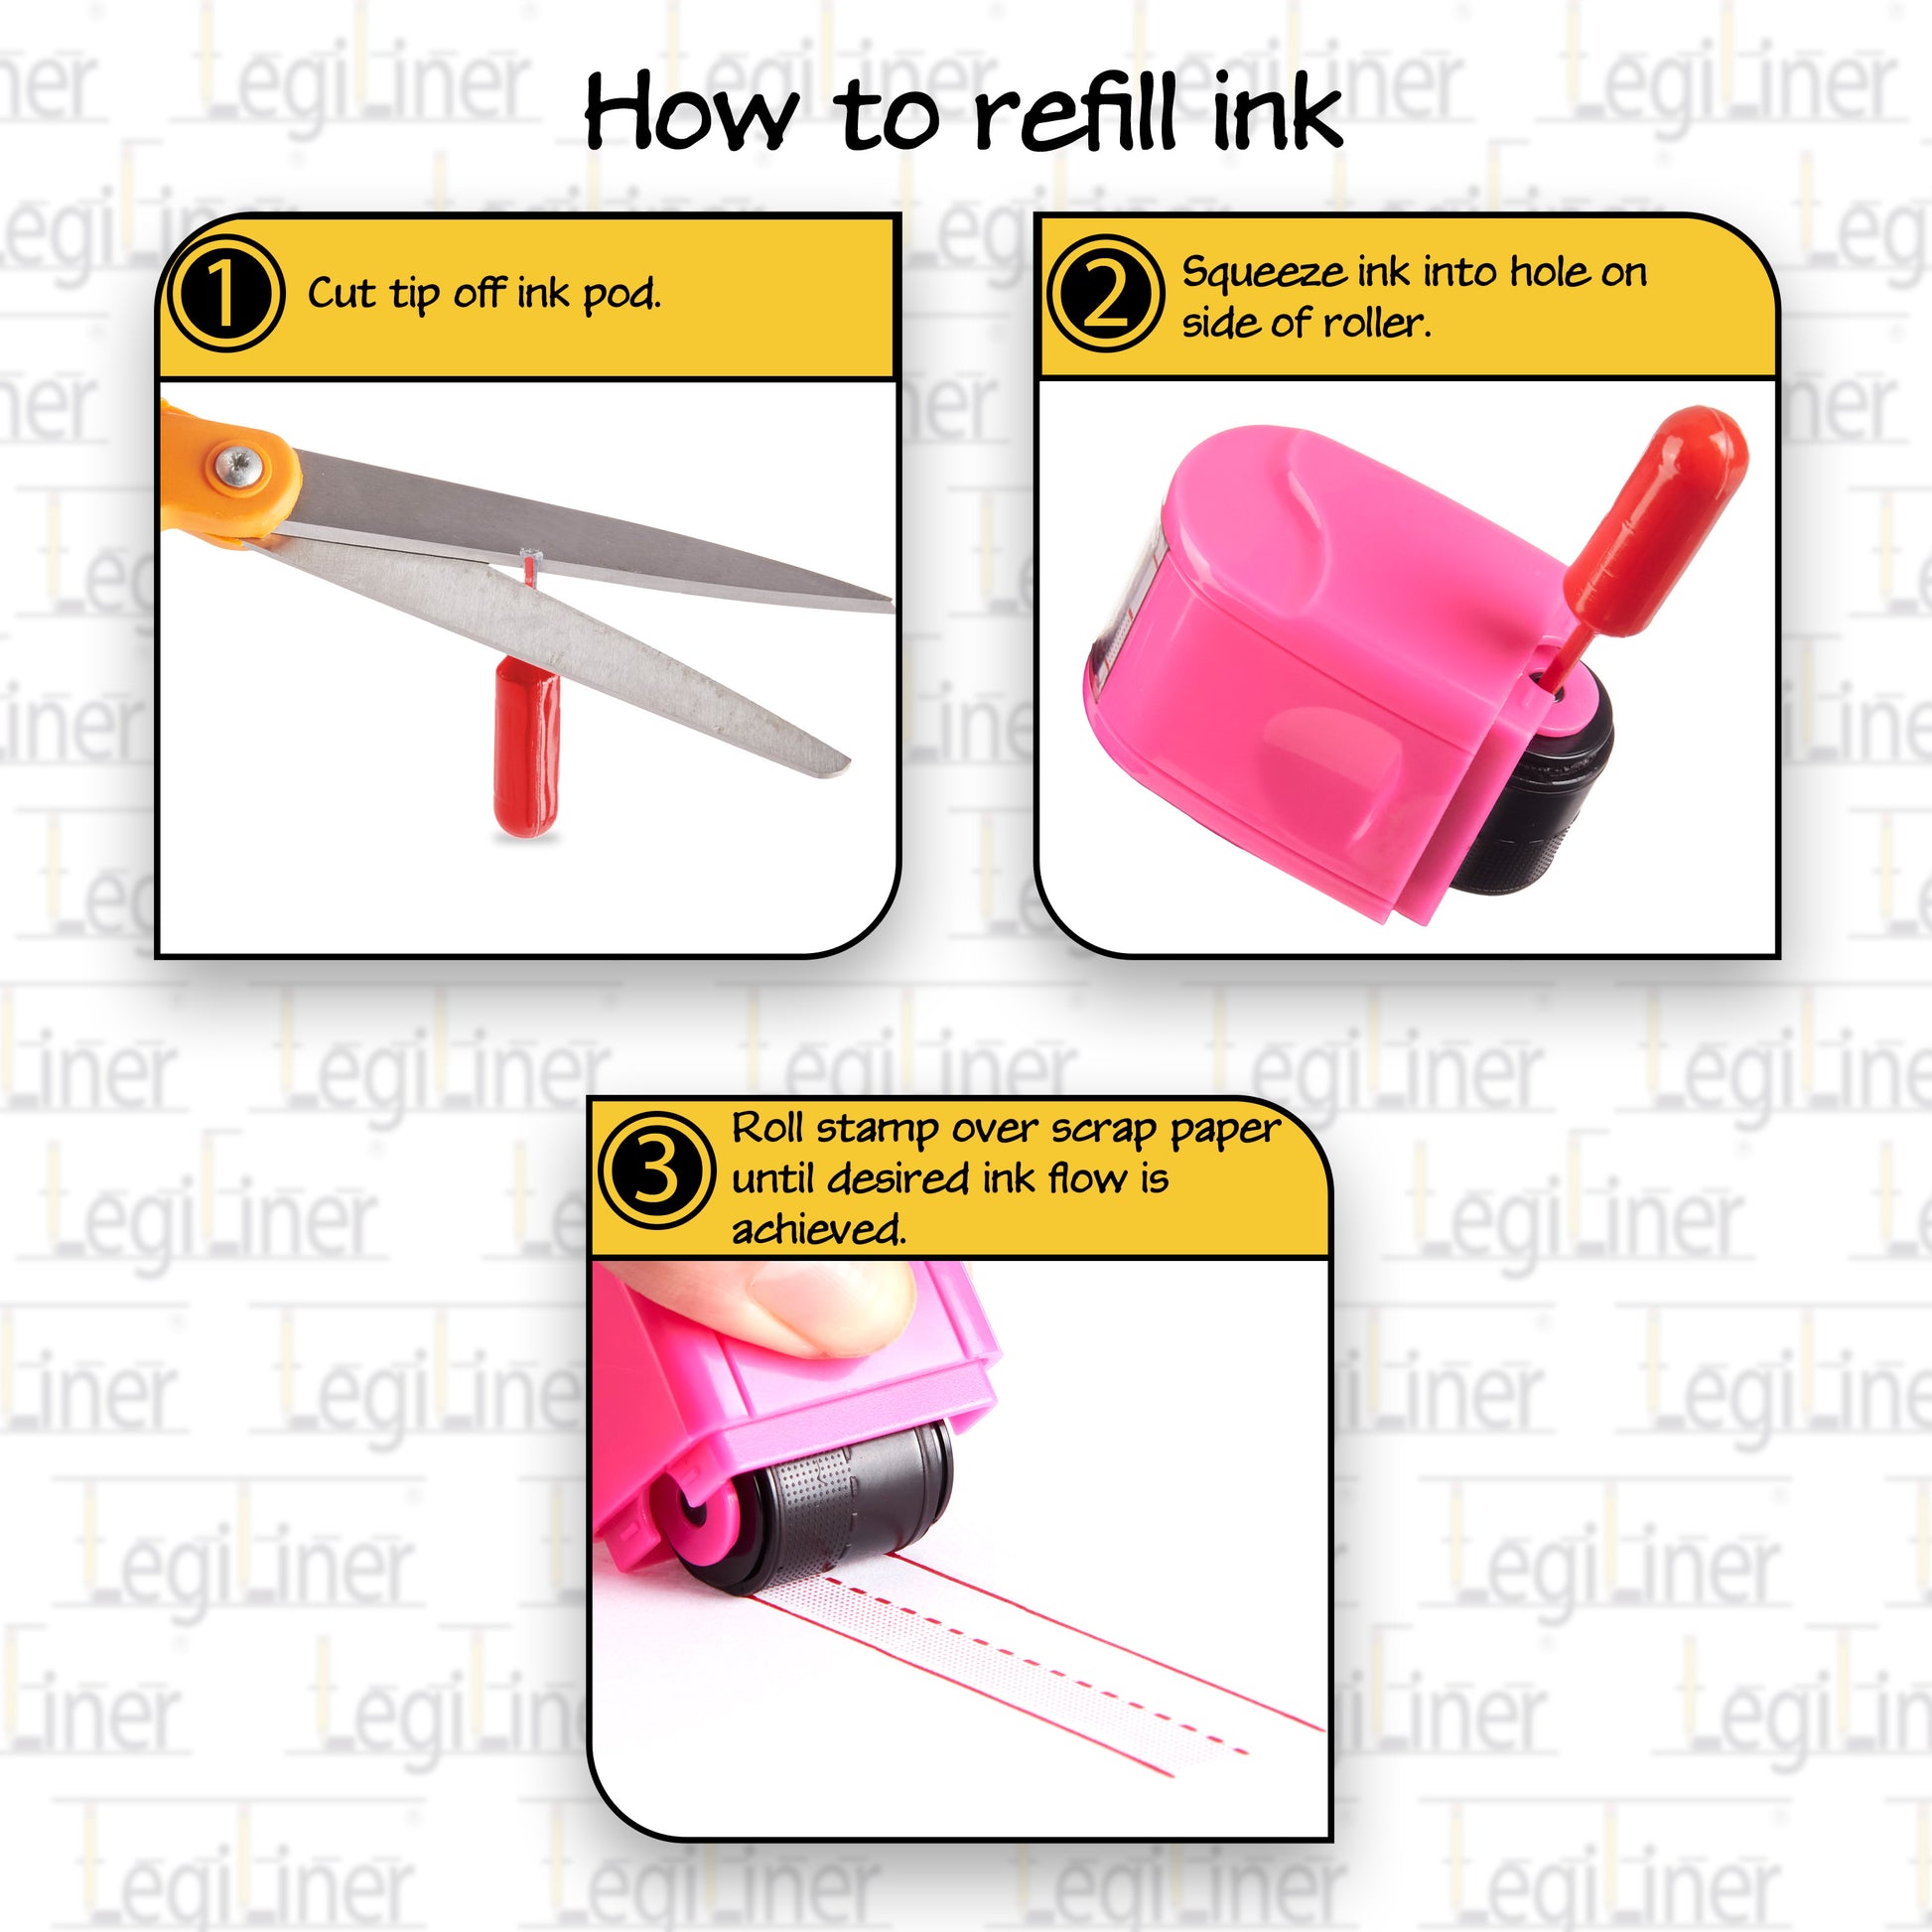  LEGILINER Super Set Bundle of 3 self-Inking Rolling Stamps  (3/4, 1/2, 3/8) : Office Products